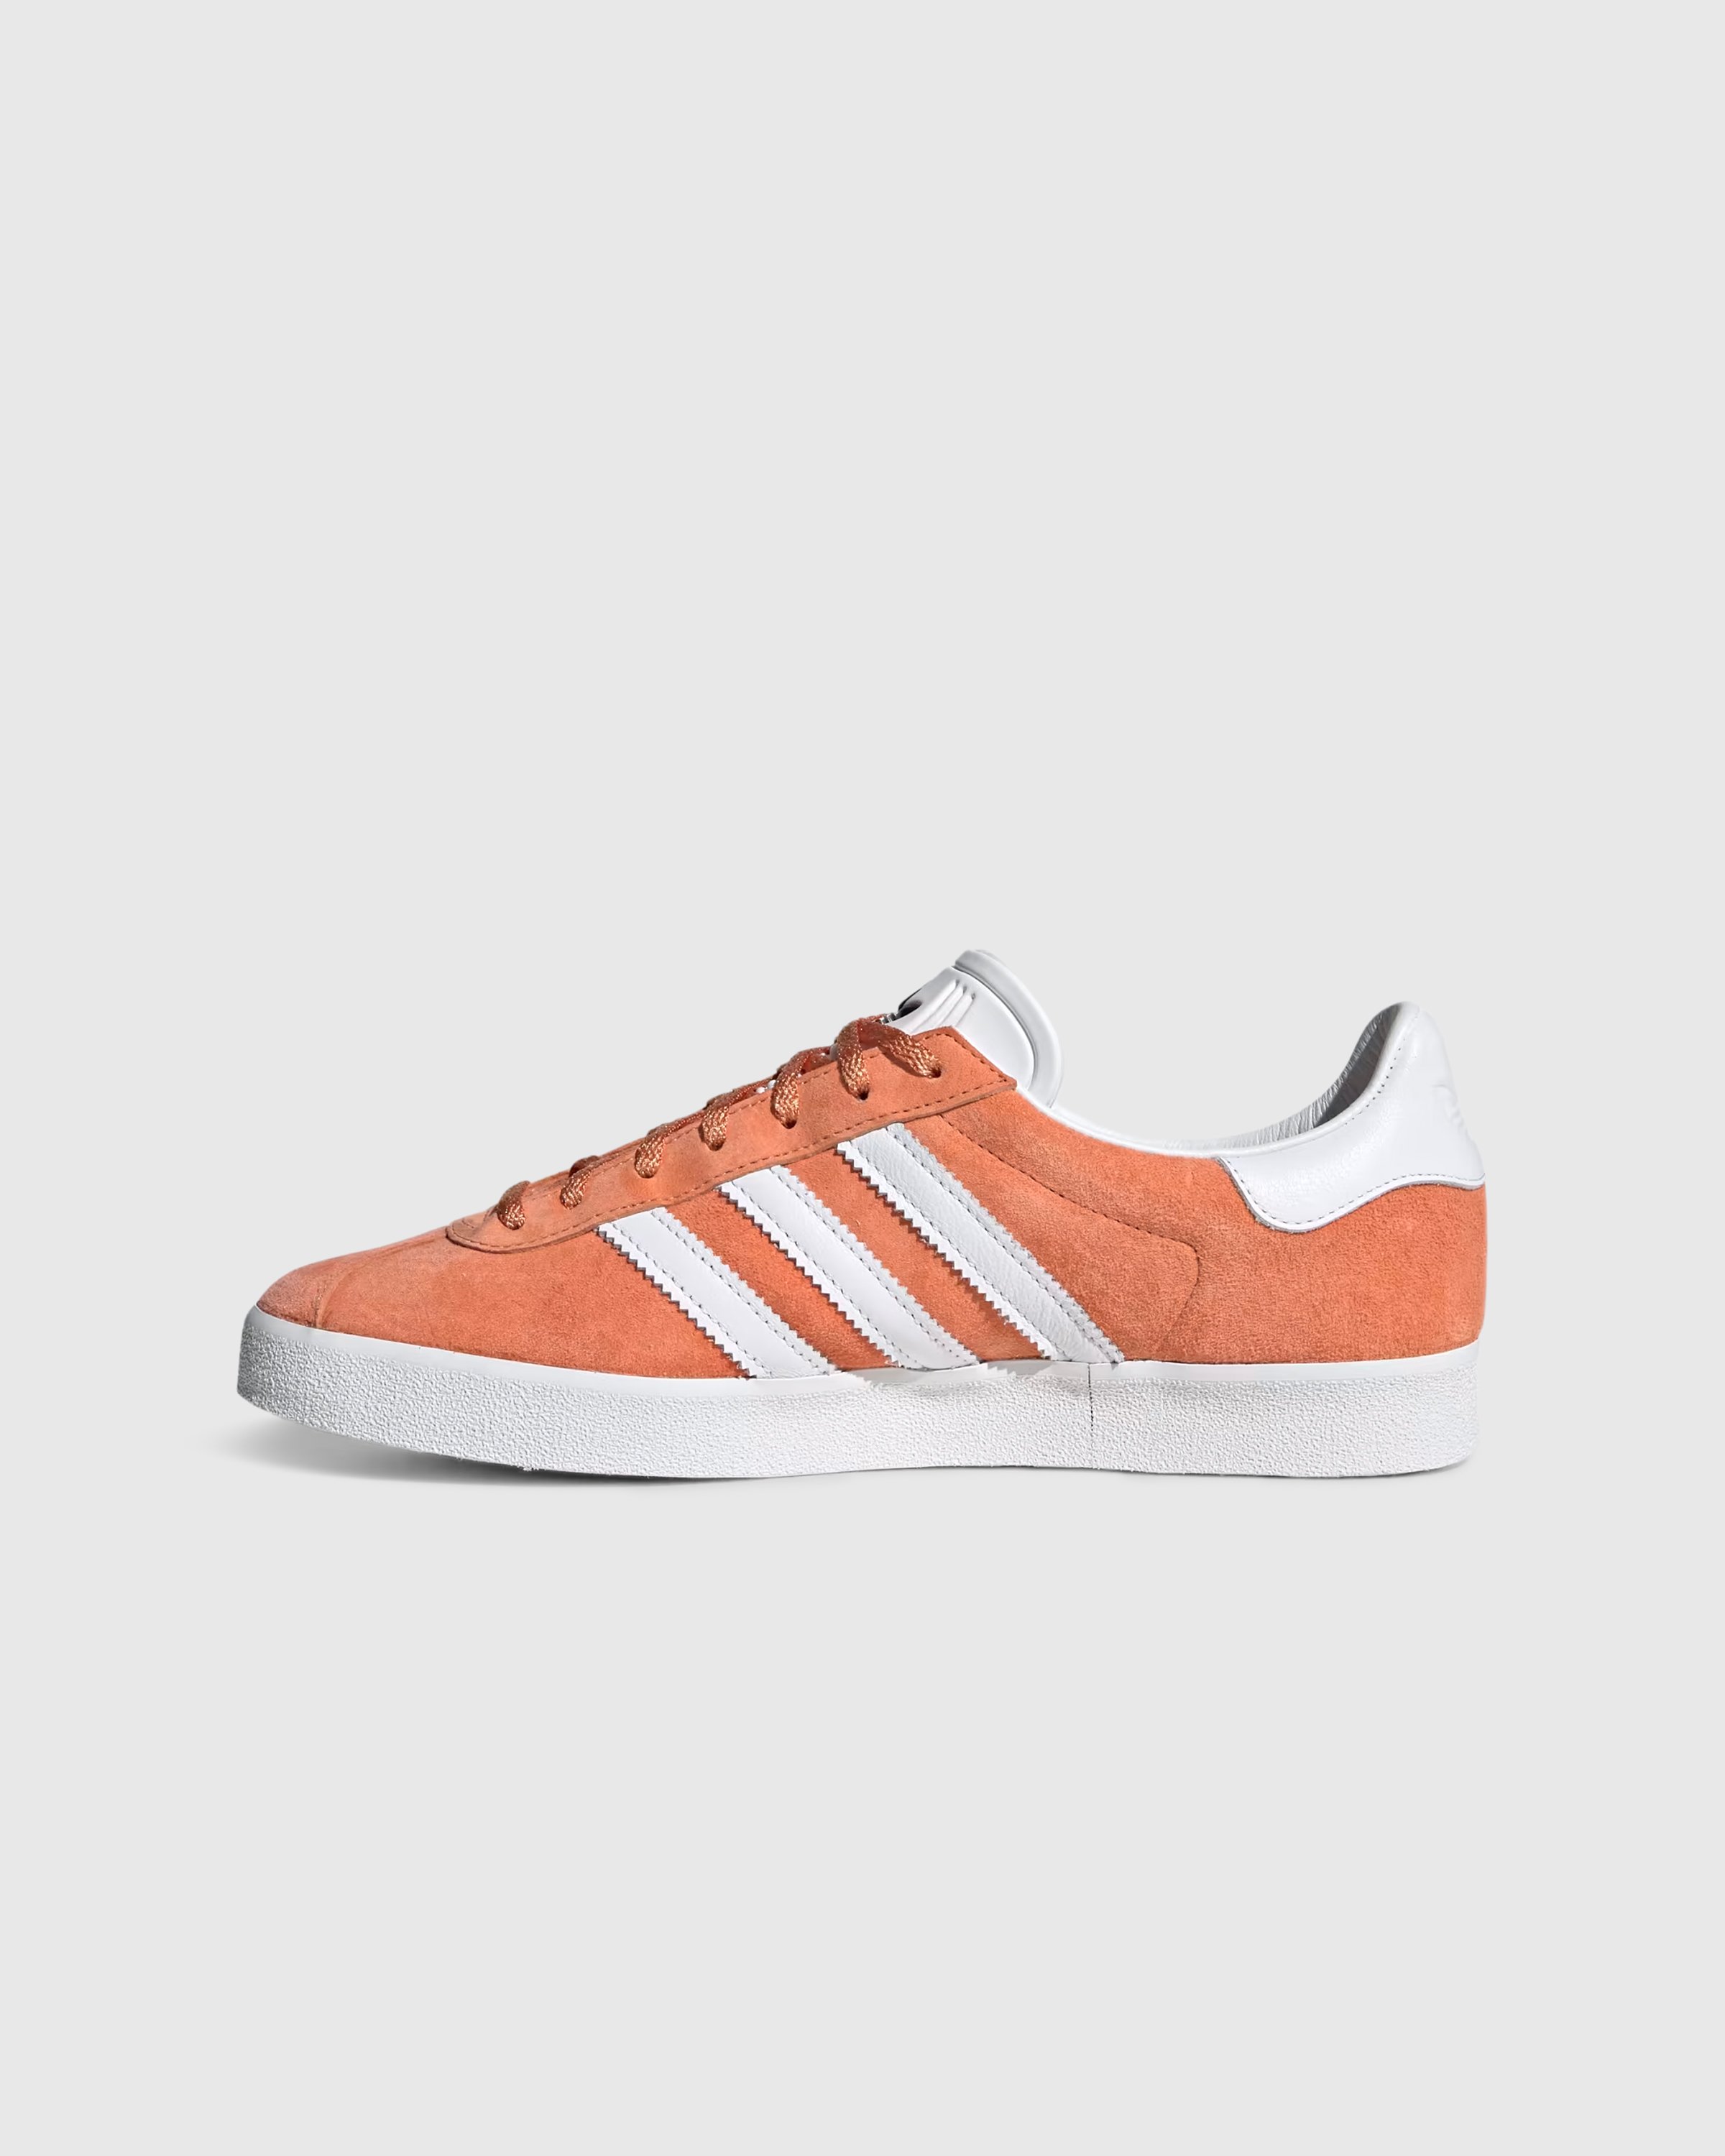 Adidas - Gazelle 85 Orange - Footwear - Orange - Image 2